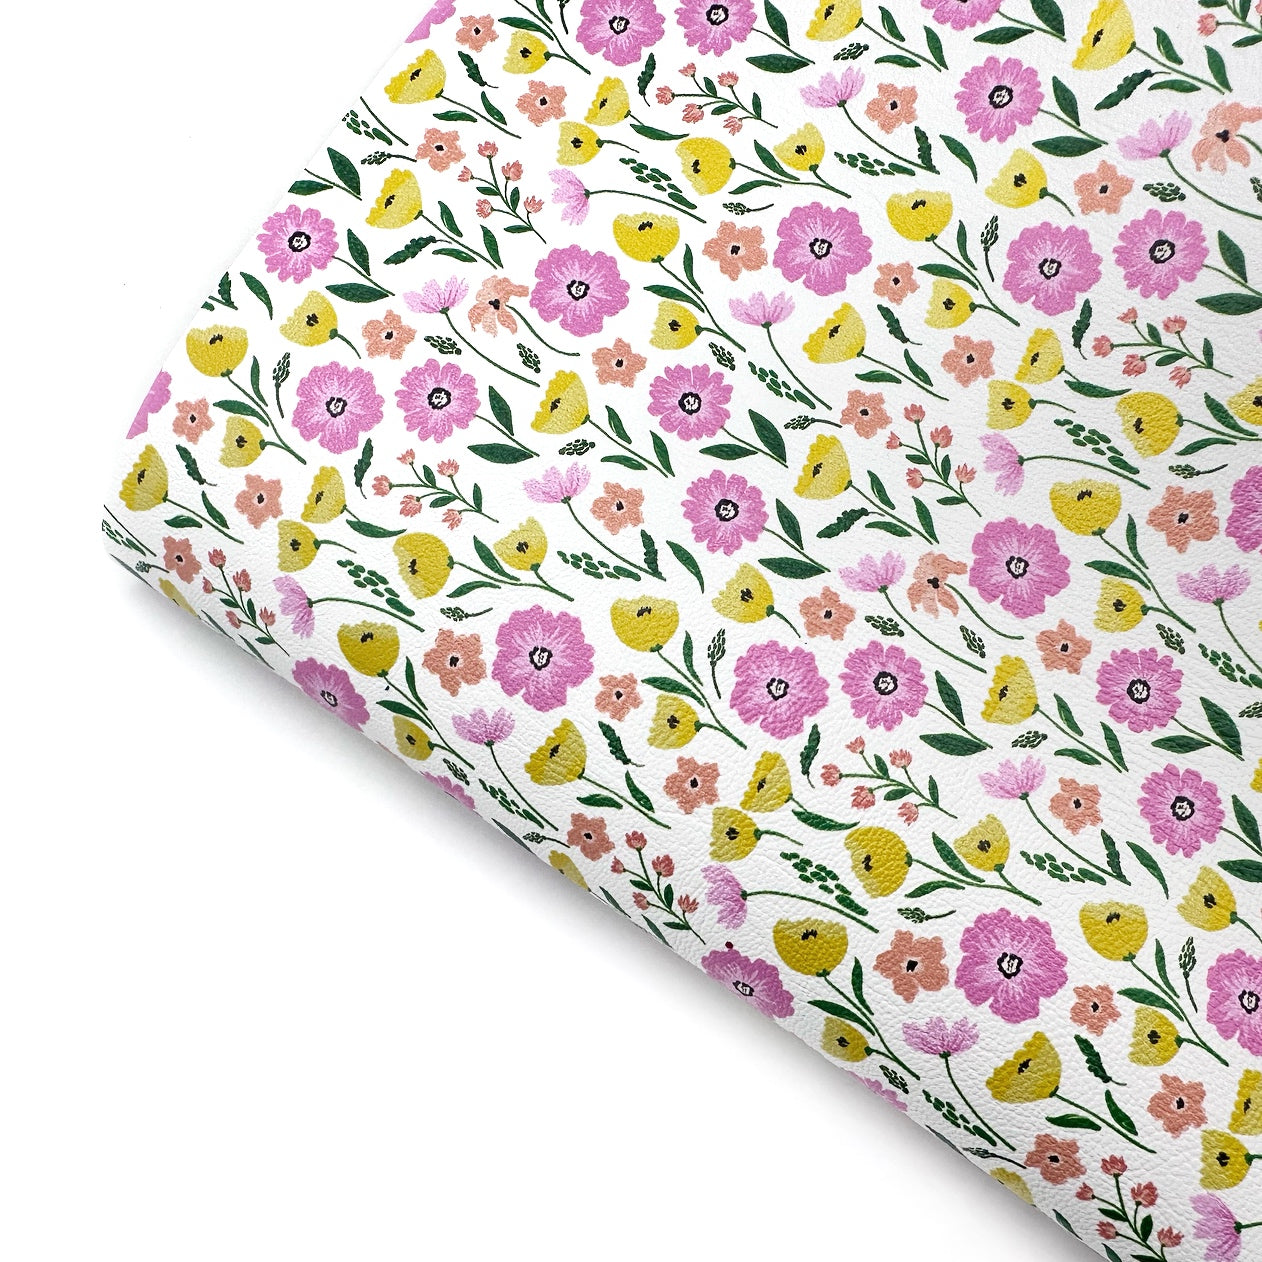 Lilac Core Colour Premium Faux Leather Fabric Sheets – Eliza Henri Craft  Supply